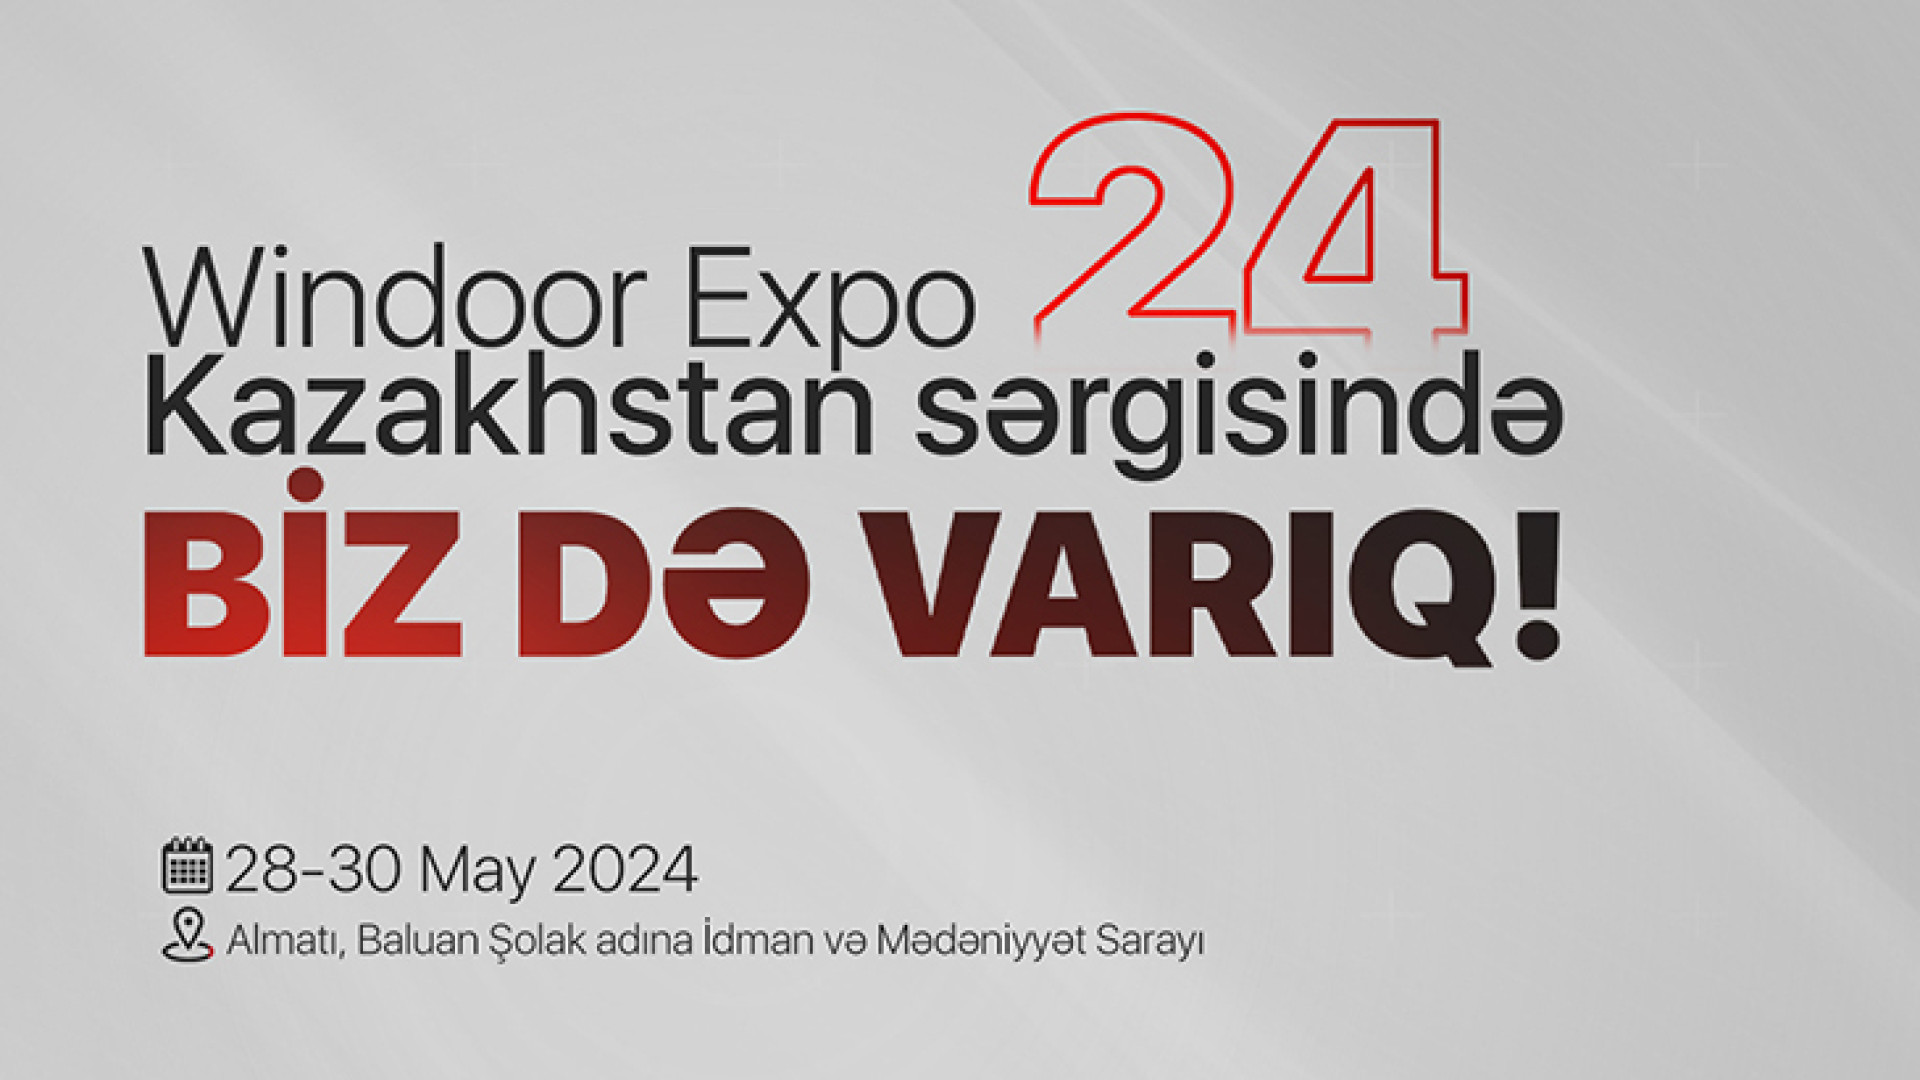 Veliev “Windoor-Expo Kazakhstan” 24 sərgisində